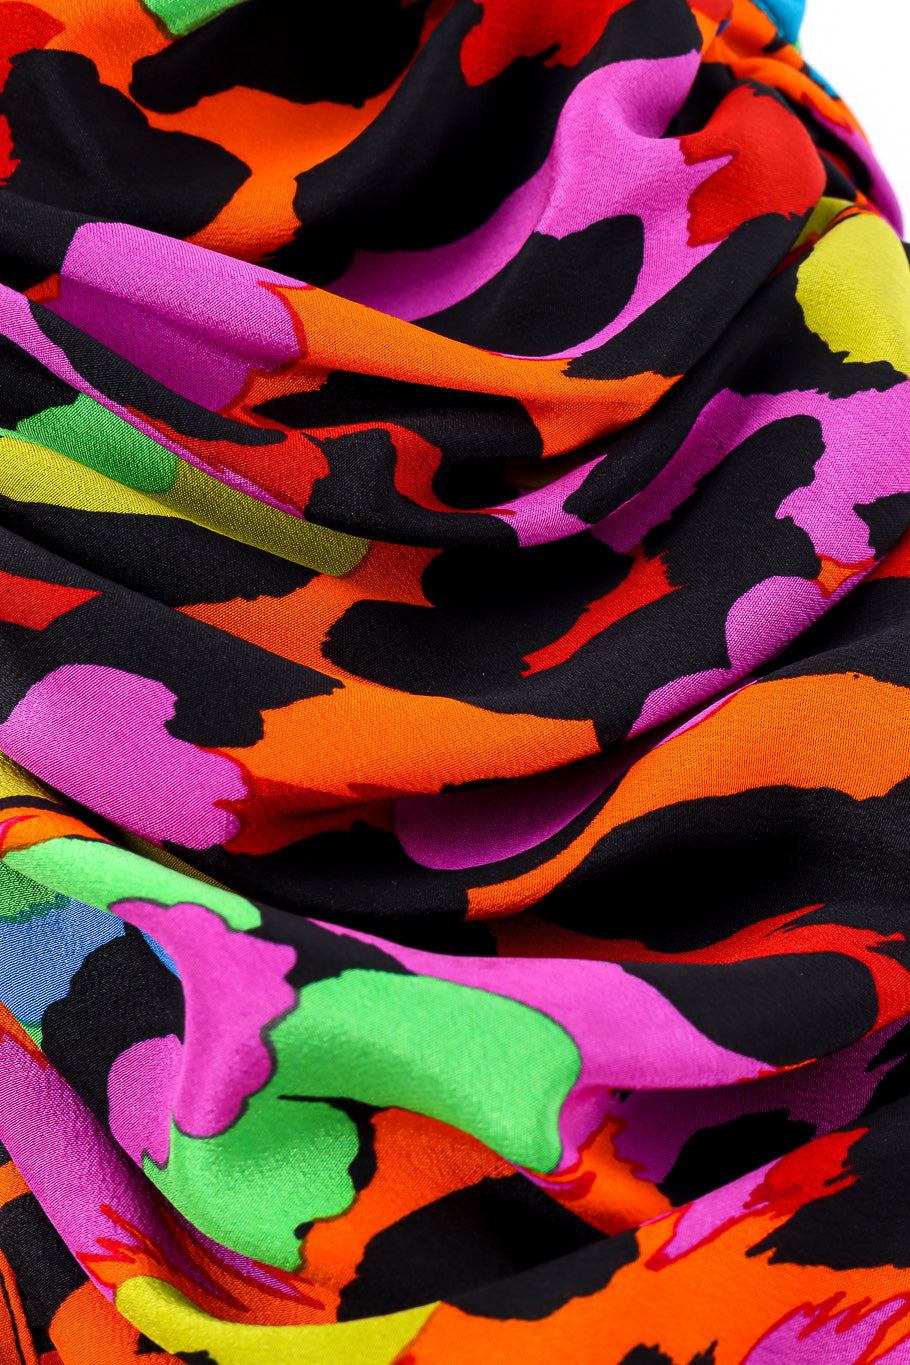 Neon leopard print dress by Jean Louise Scherrer flat lay ruching close @recessla